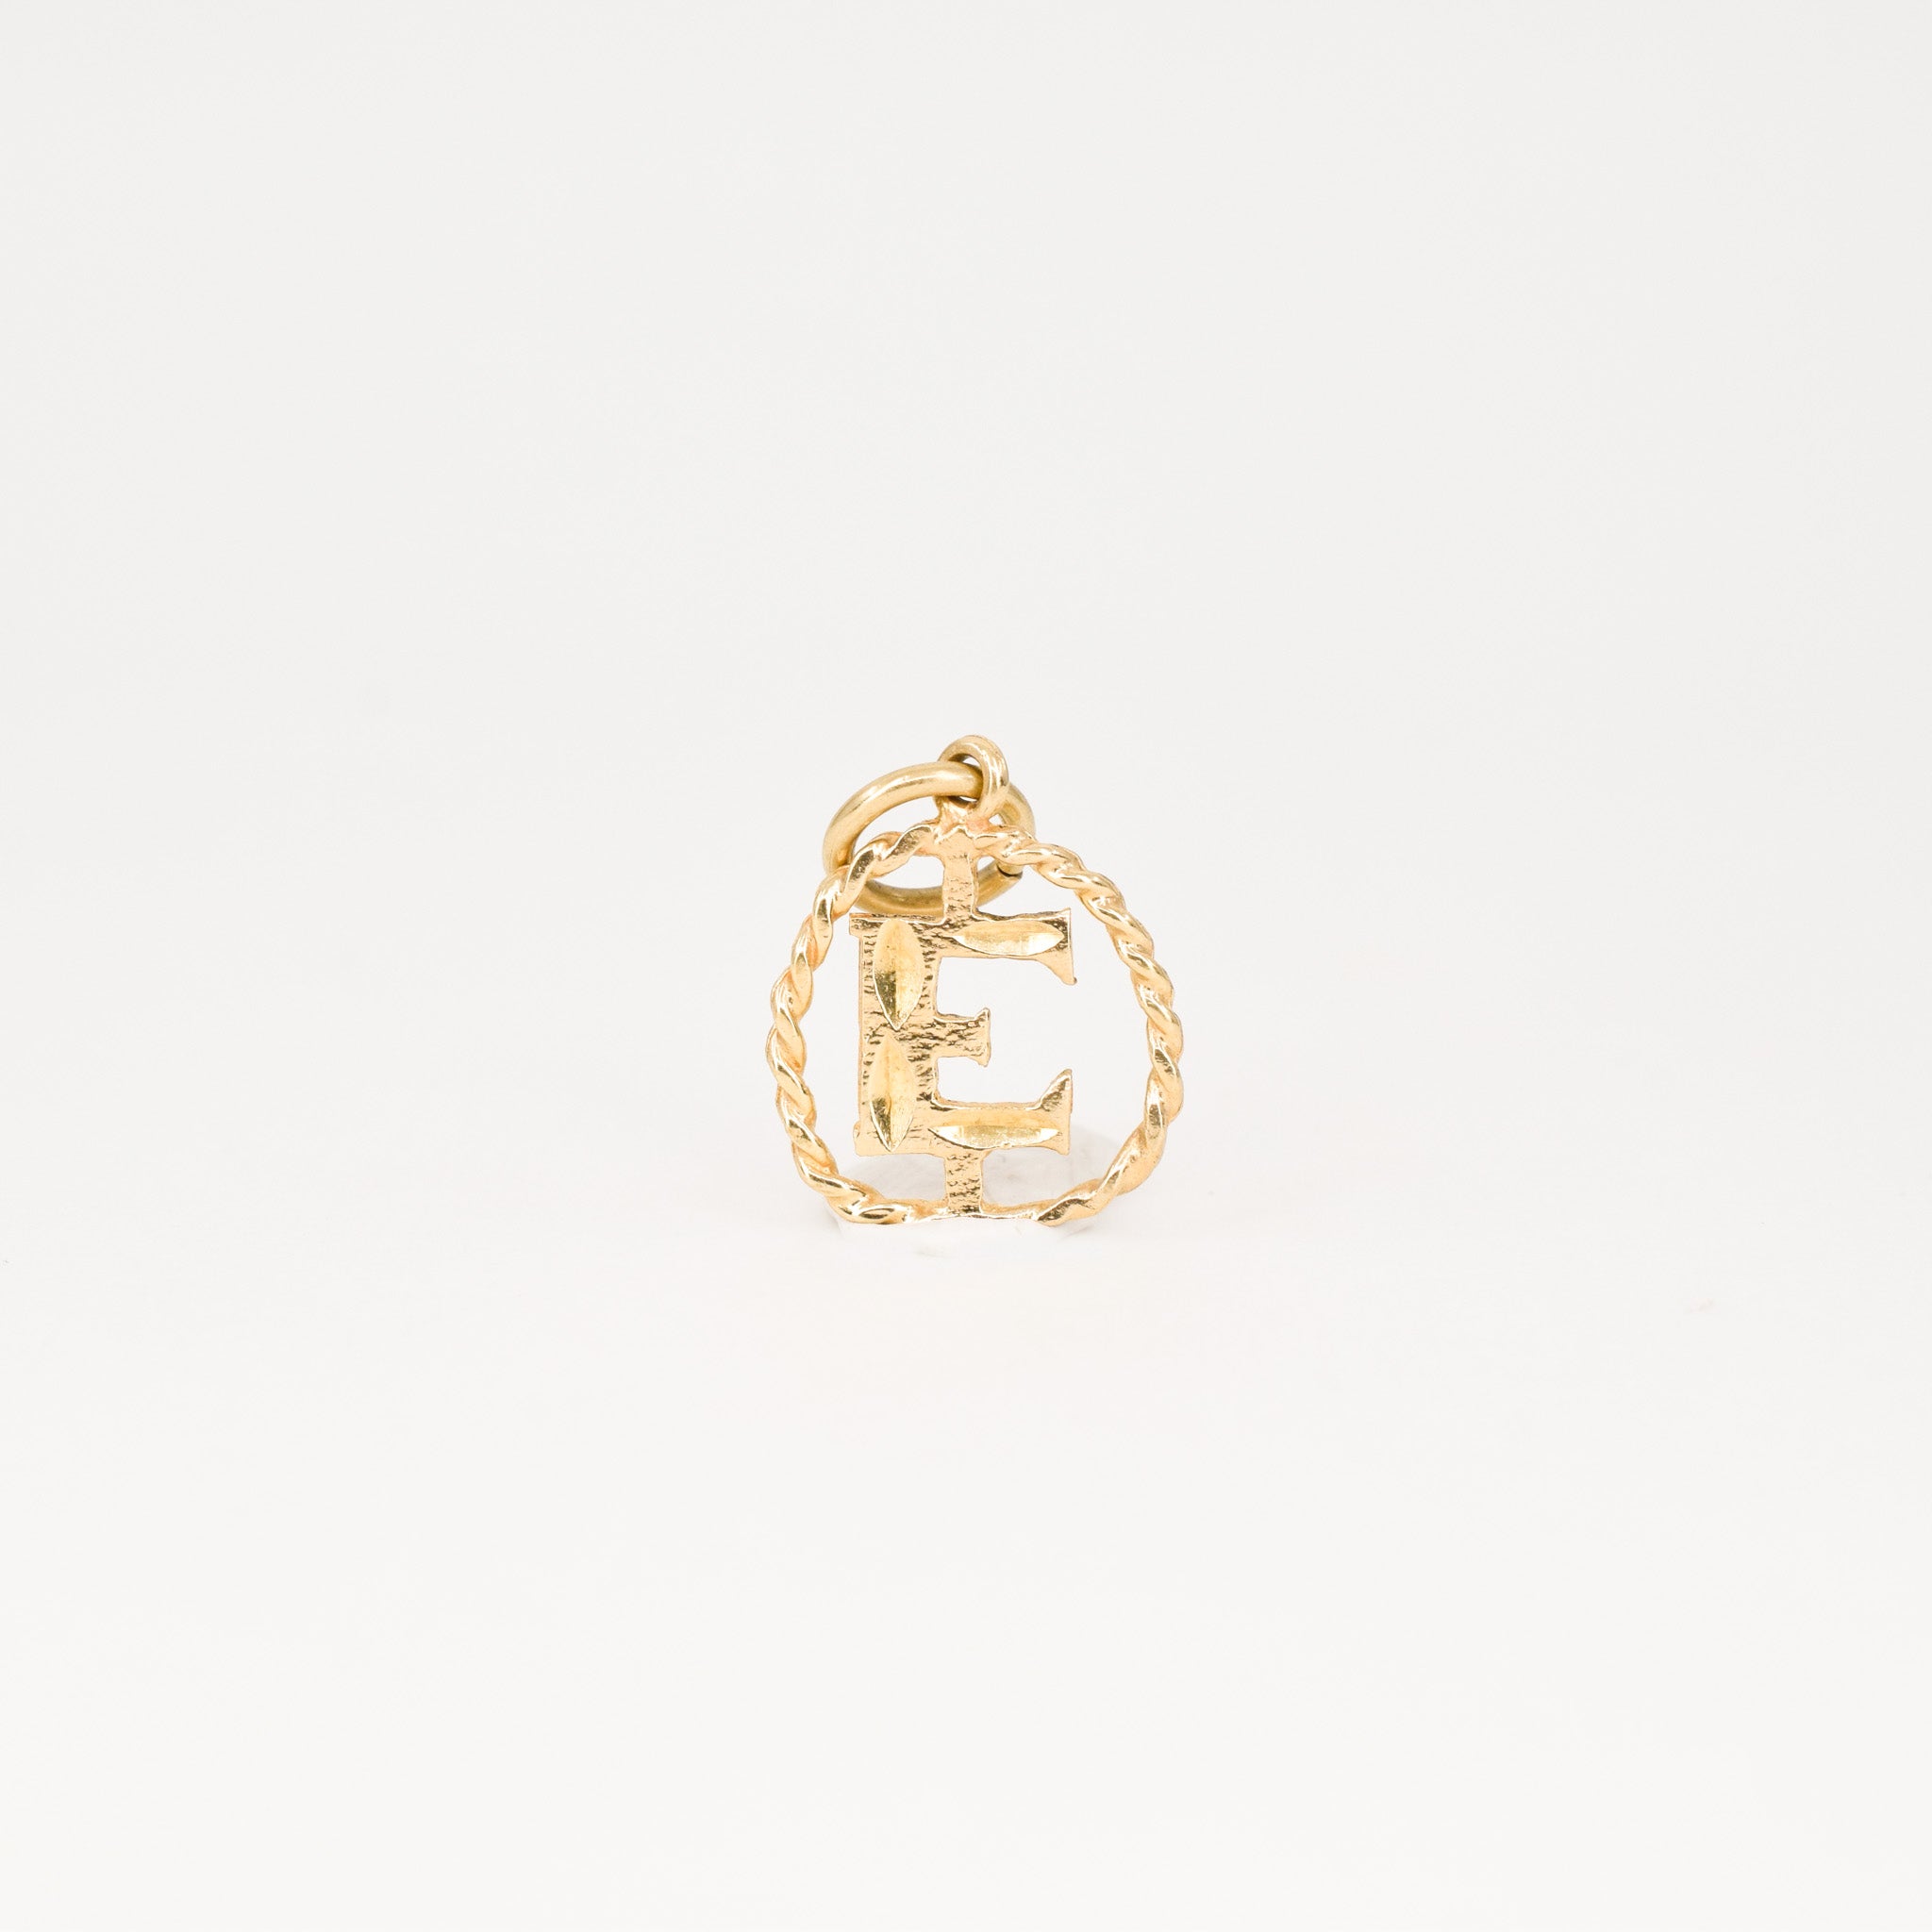 vintage gold 'e' charm pendant, folklor vintage jewelry canada